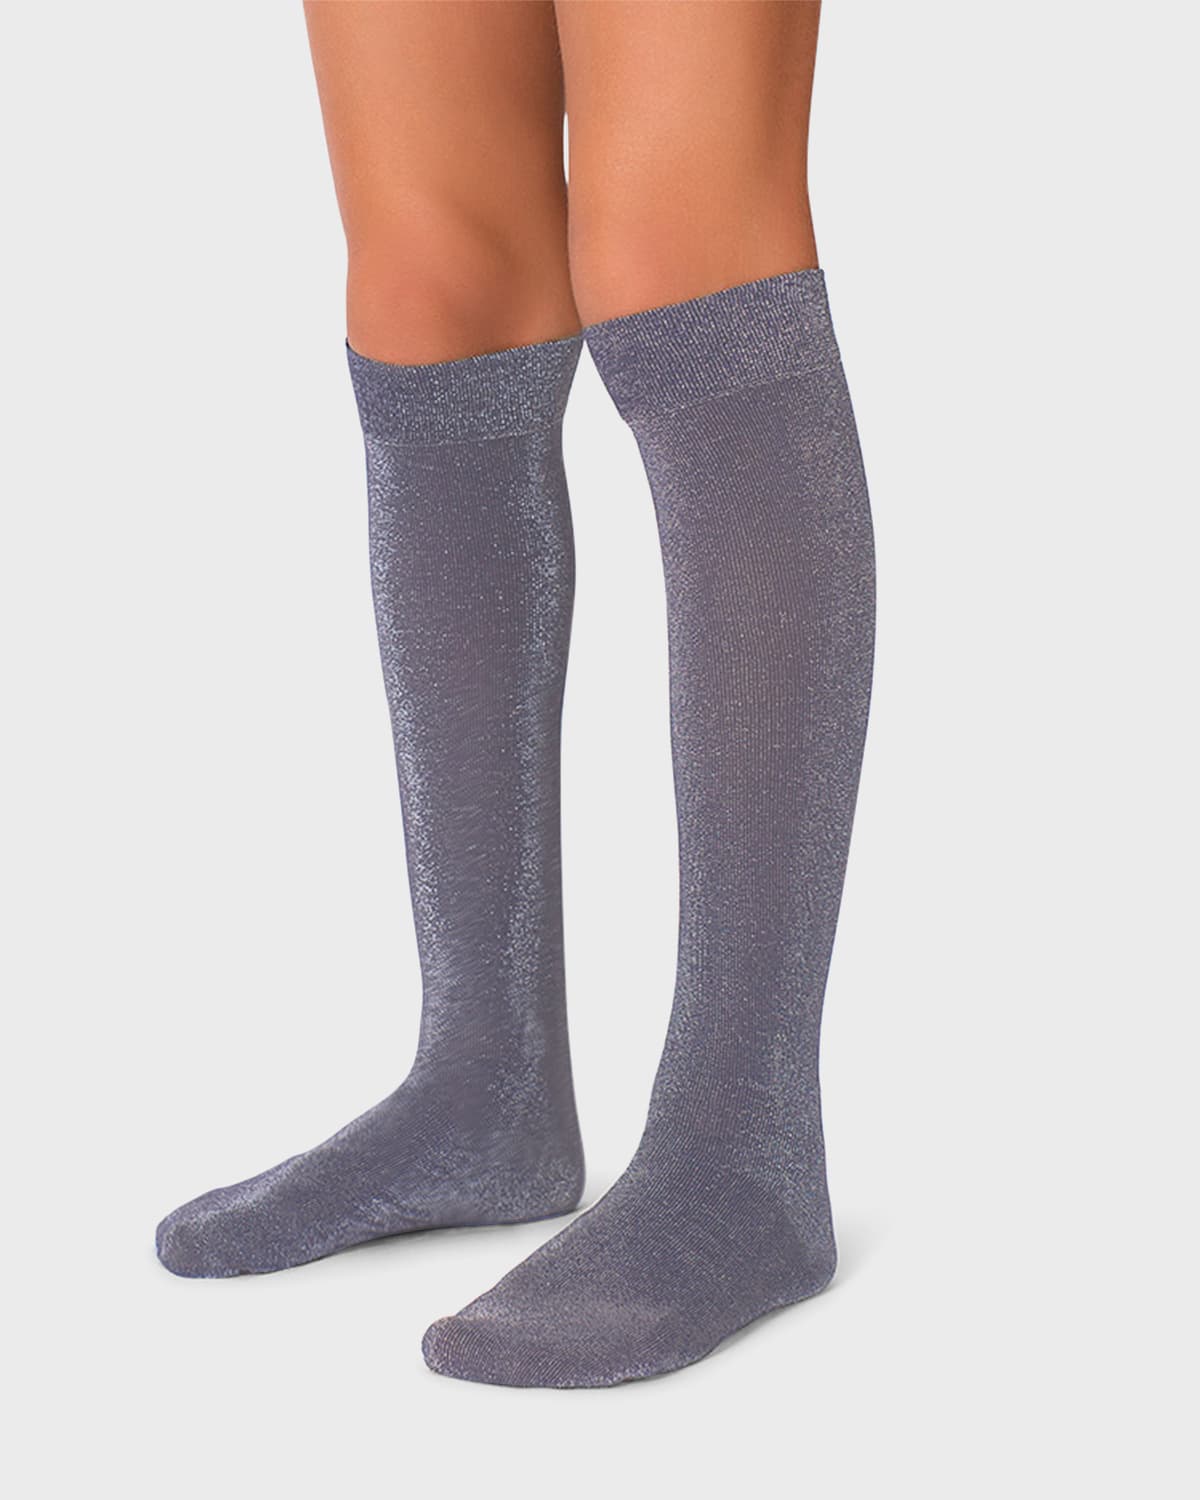 Mama Luma Kid's Glitter Knee-High Socks, Size 2-12